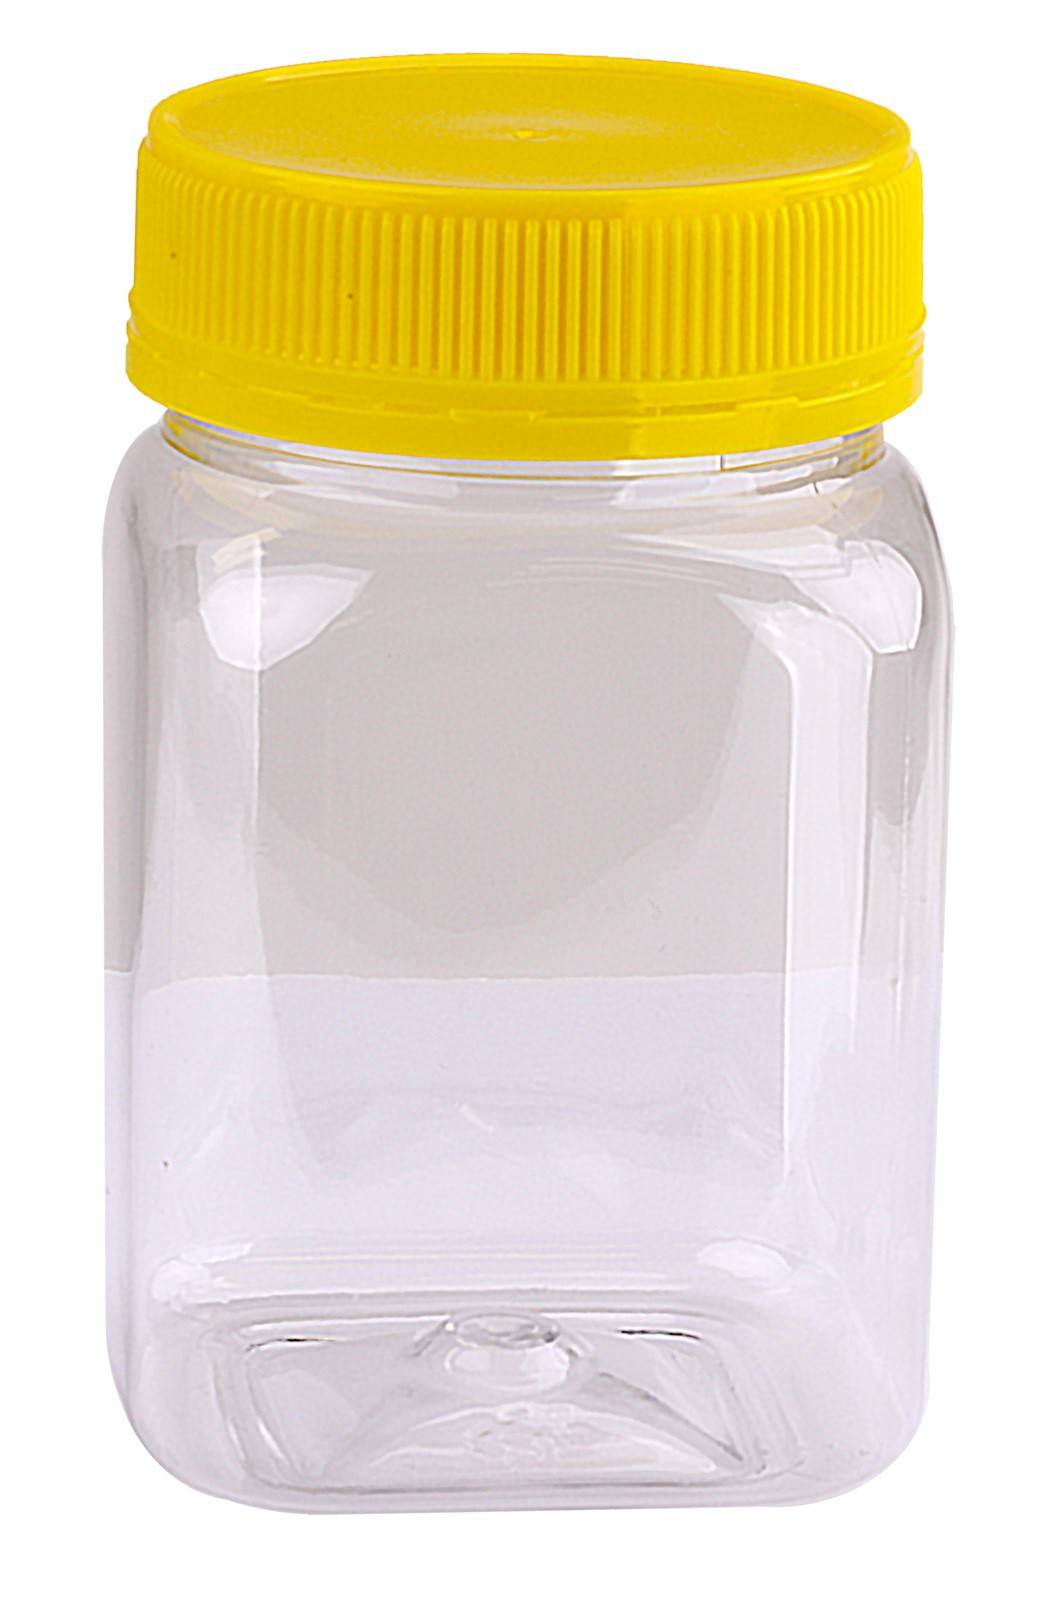 Plastic Honey Jar 357ml Square Yellow Anti-Theft Lid  Food Grade  Carton 210 pcs  Jars & Lids